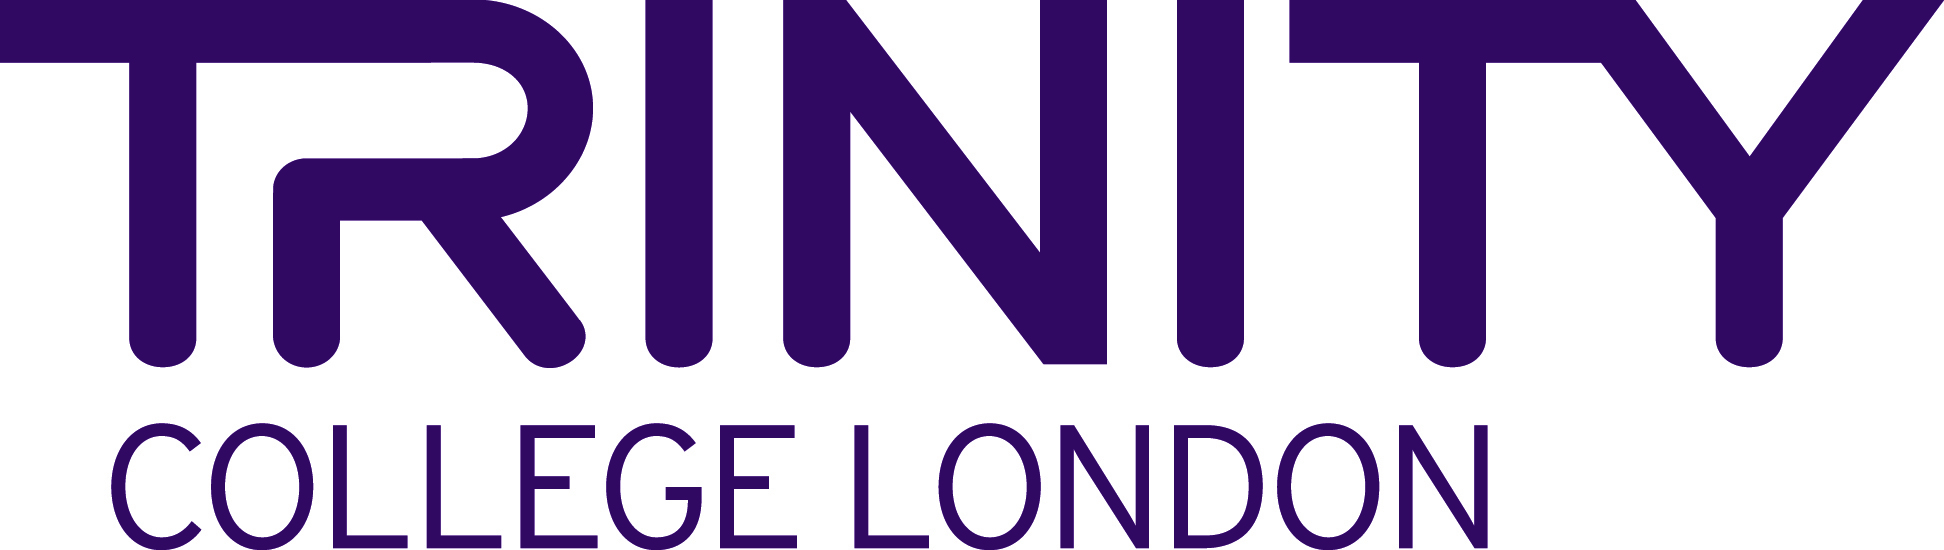 TCL purple cmyk logo (550pixels high) (new purple)